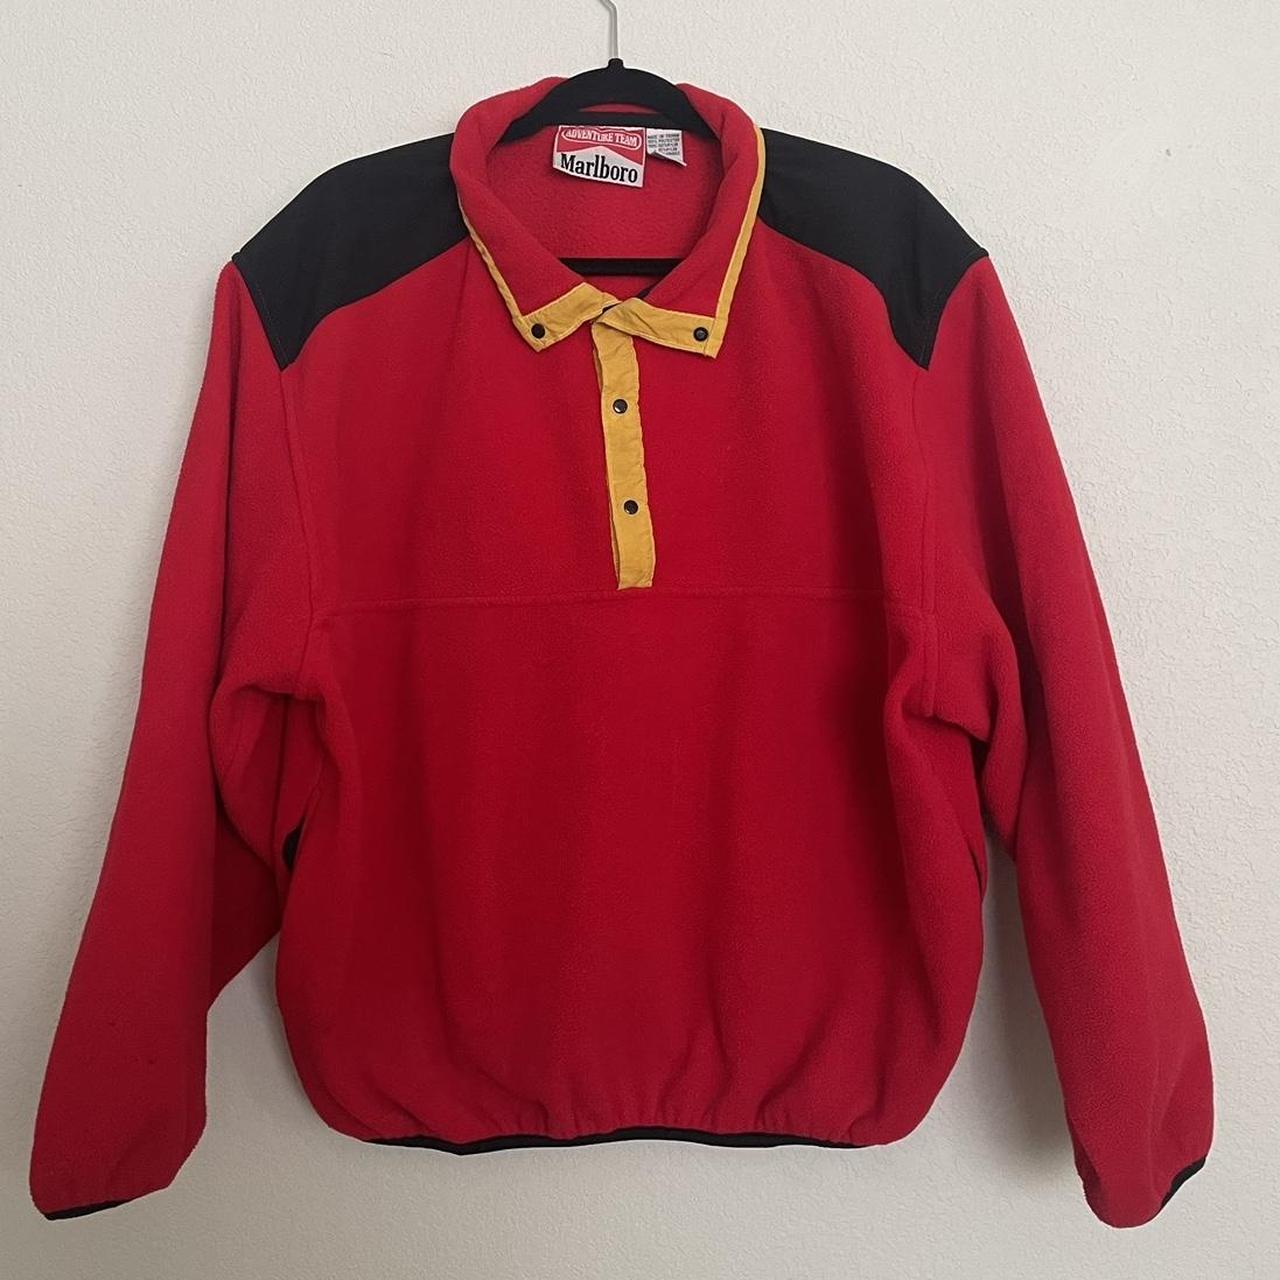 Marlboro Men's Red and Yellow Sweatshirt | Depop